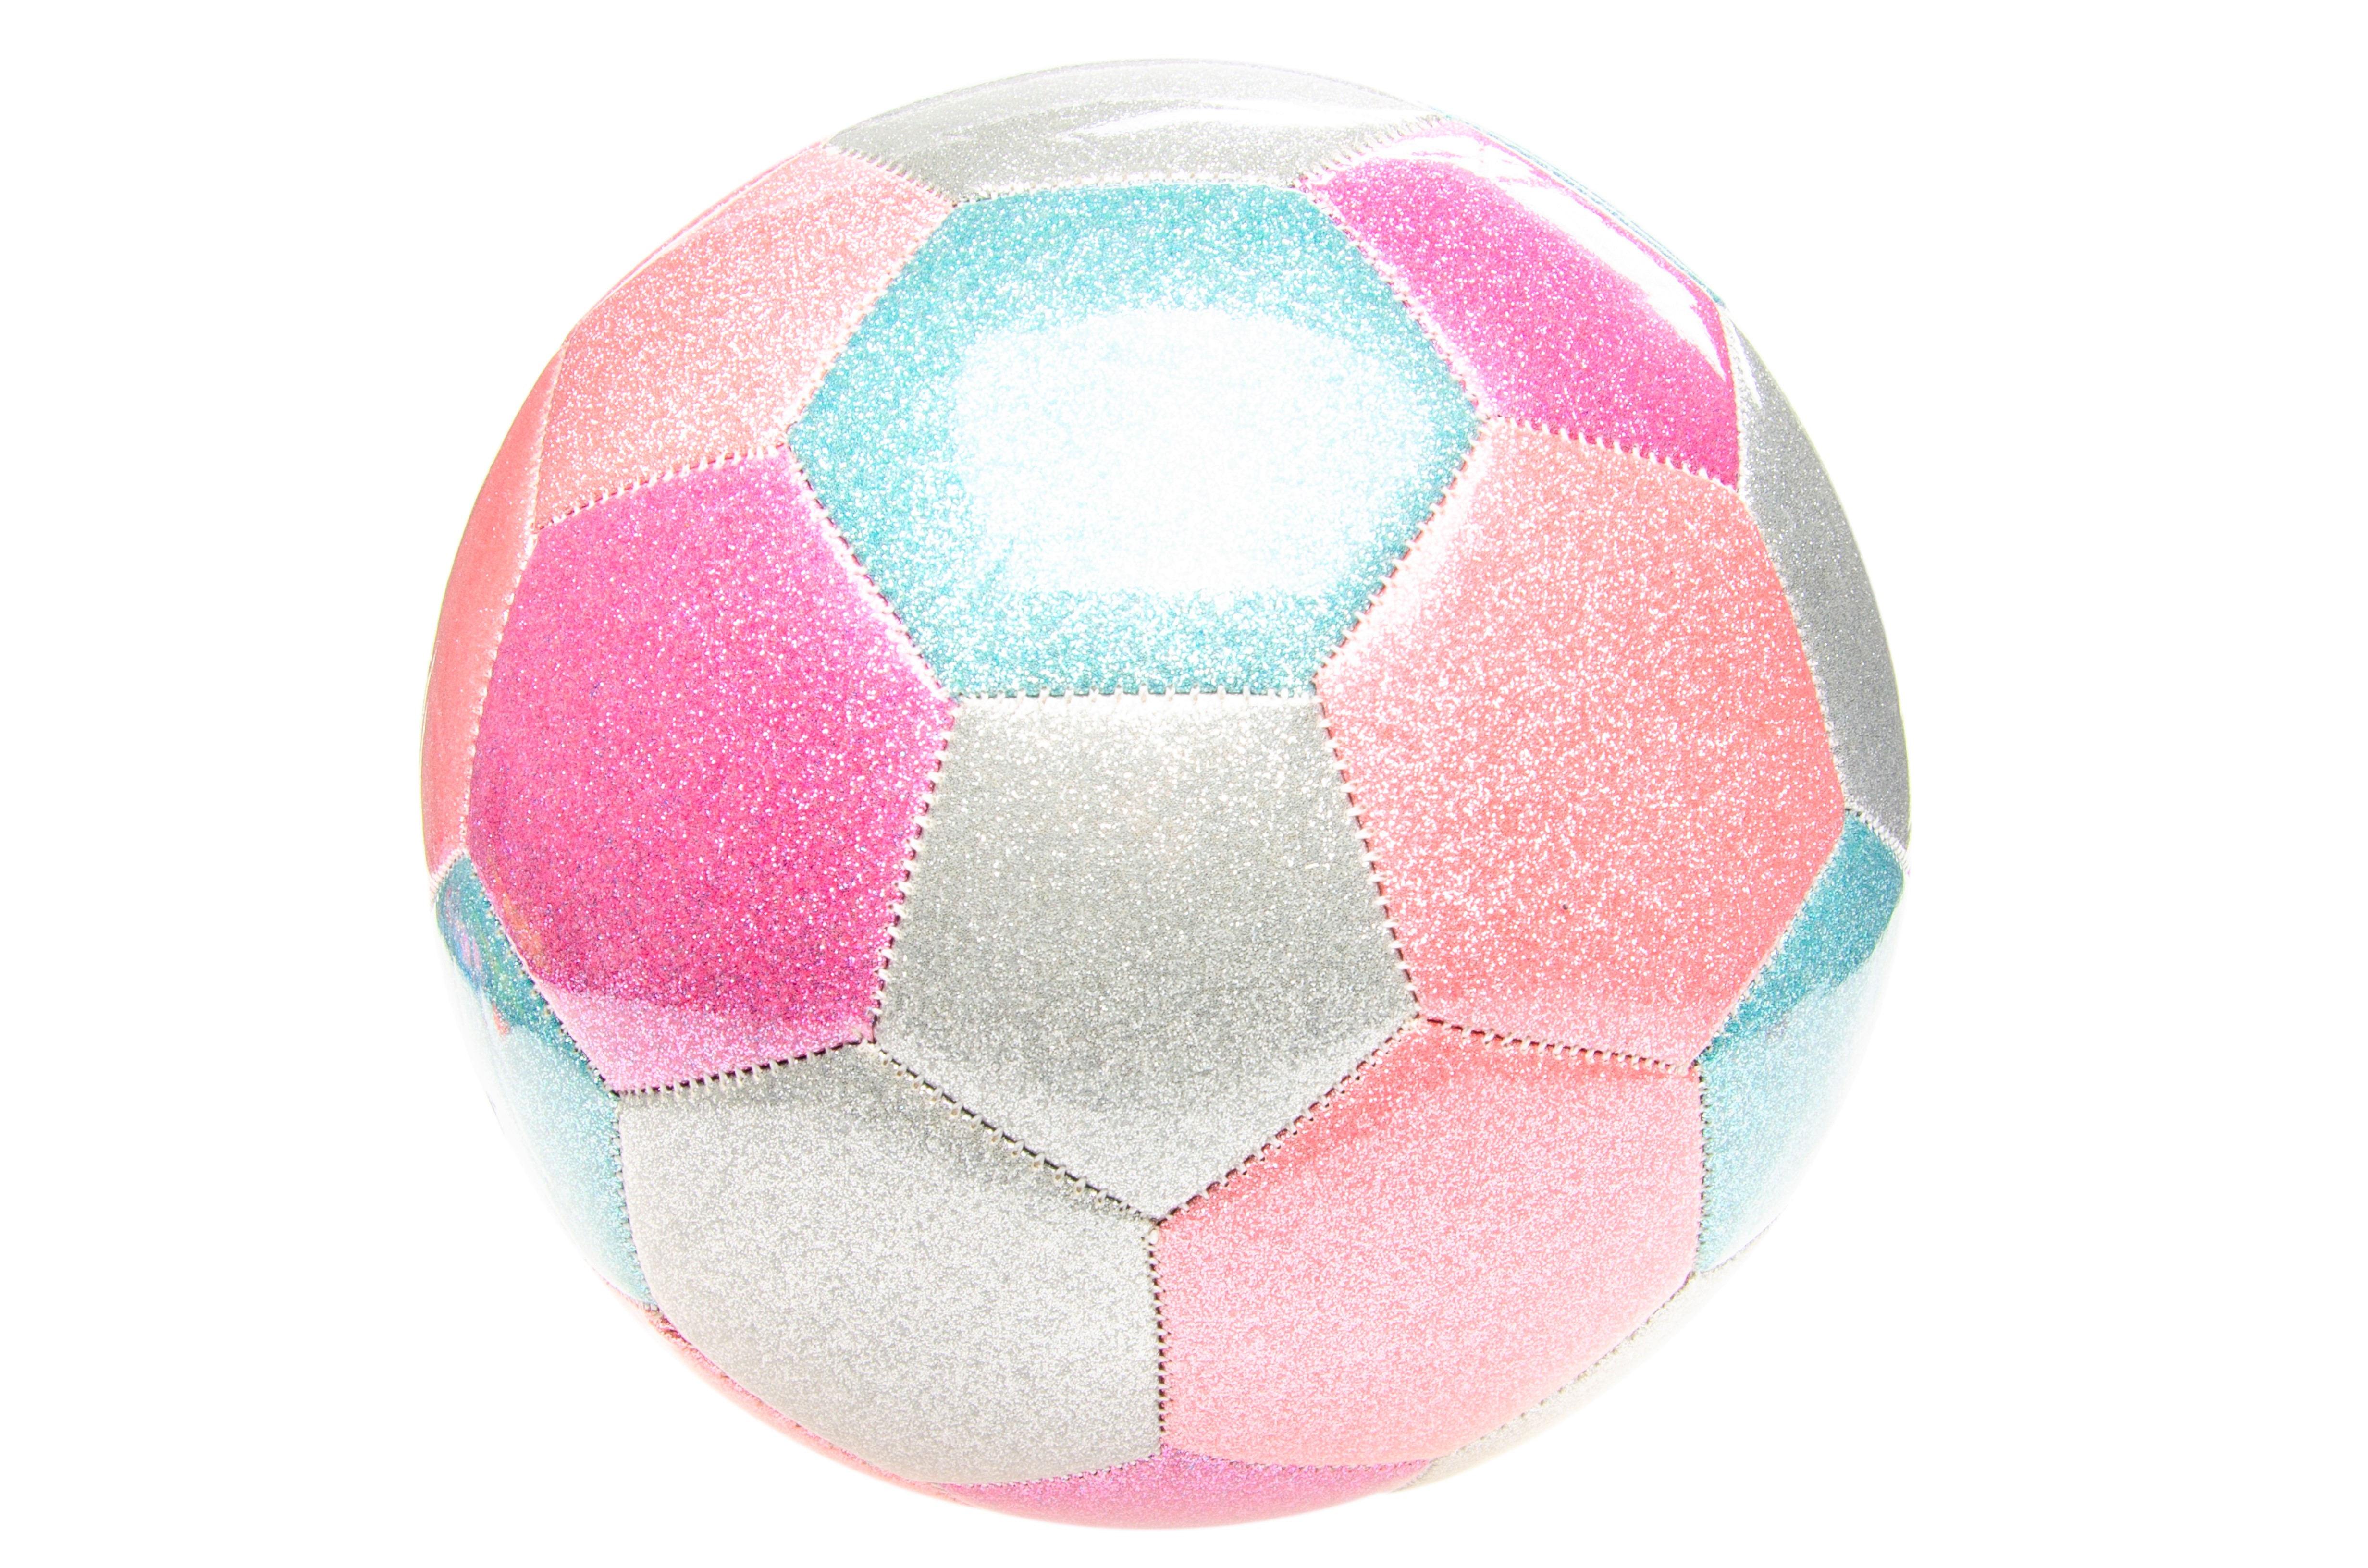 Football - Metallic Pink/Silver, Size 5 (13307) - Leker